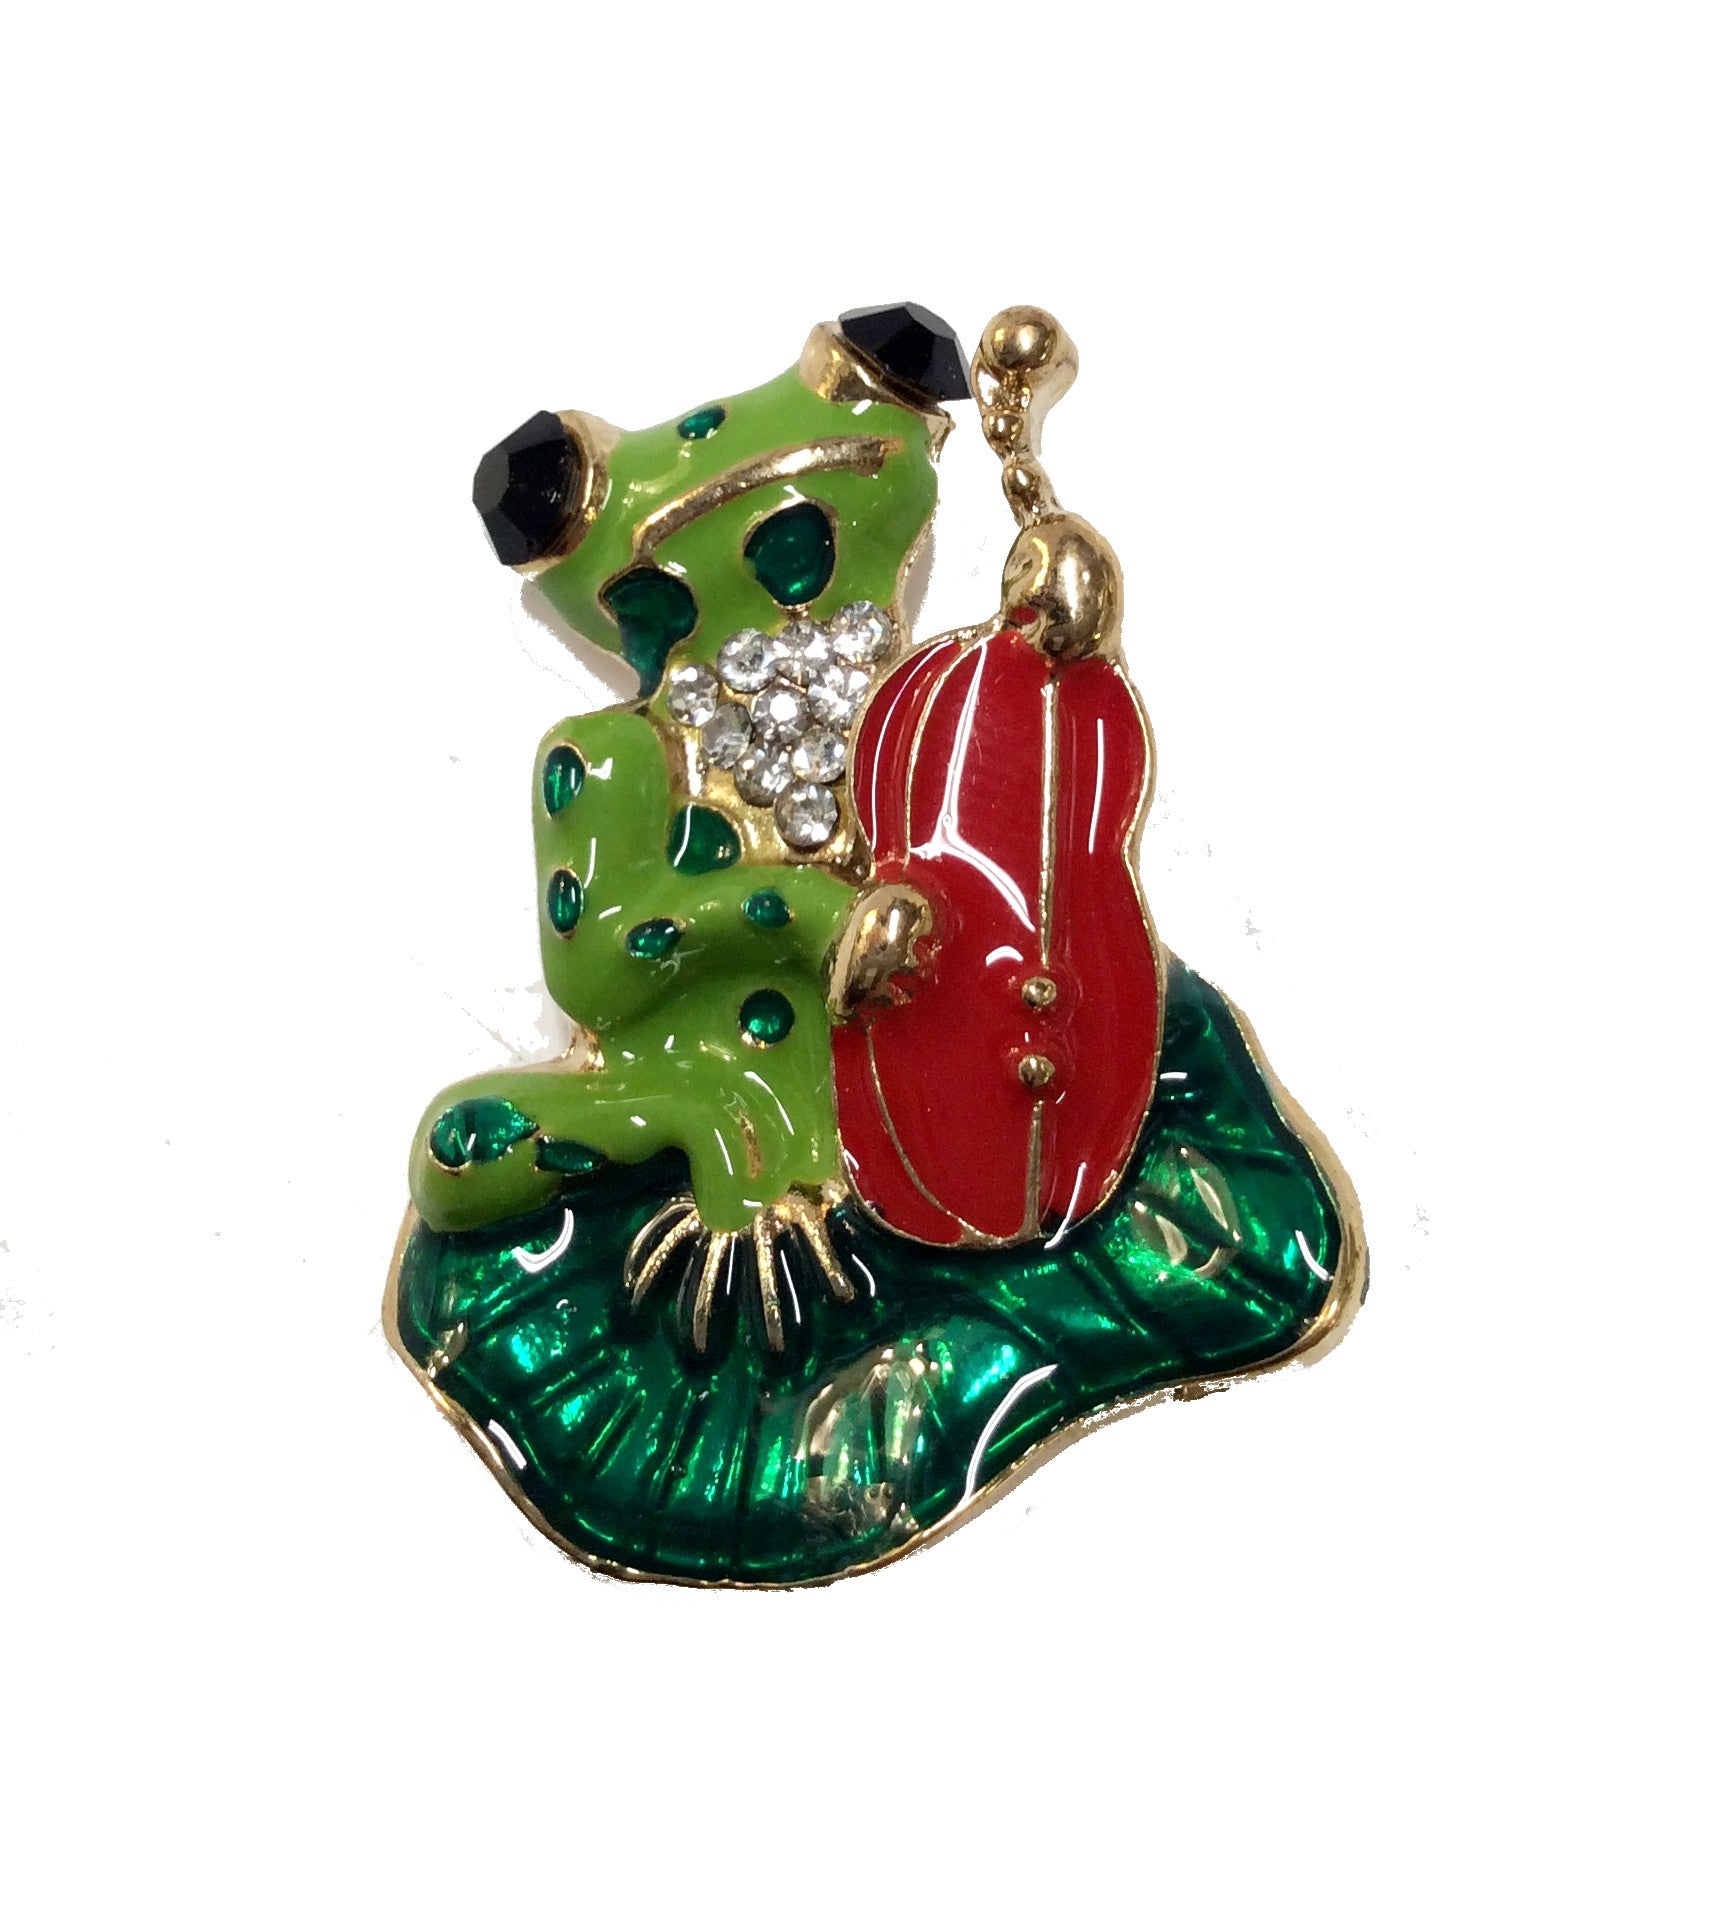 Frog with Violin Pin#12-30670